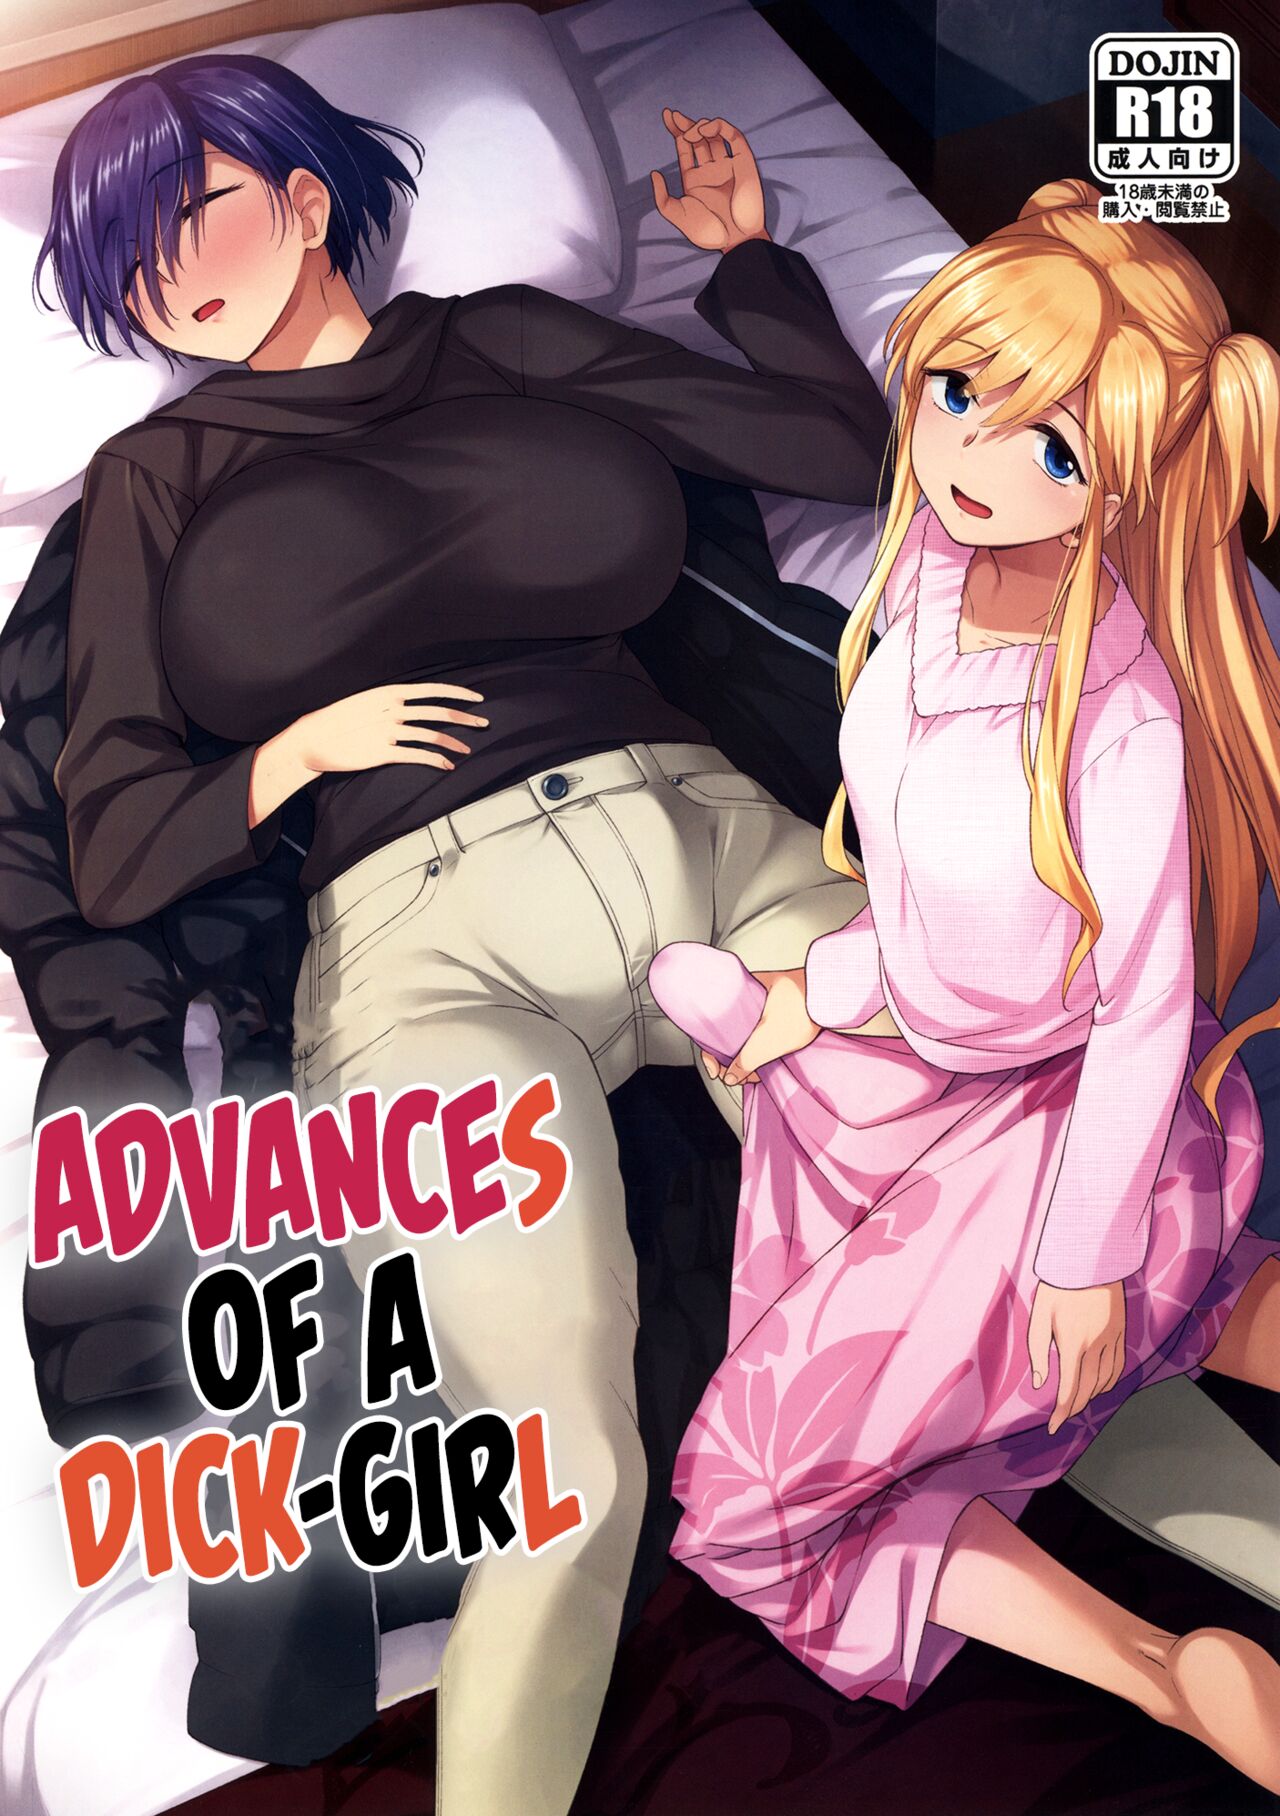 Anime girl with dick